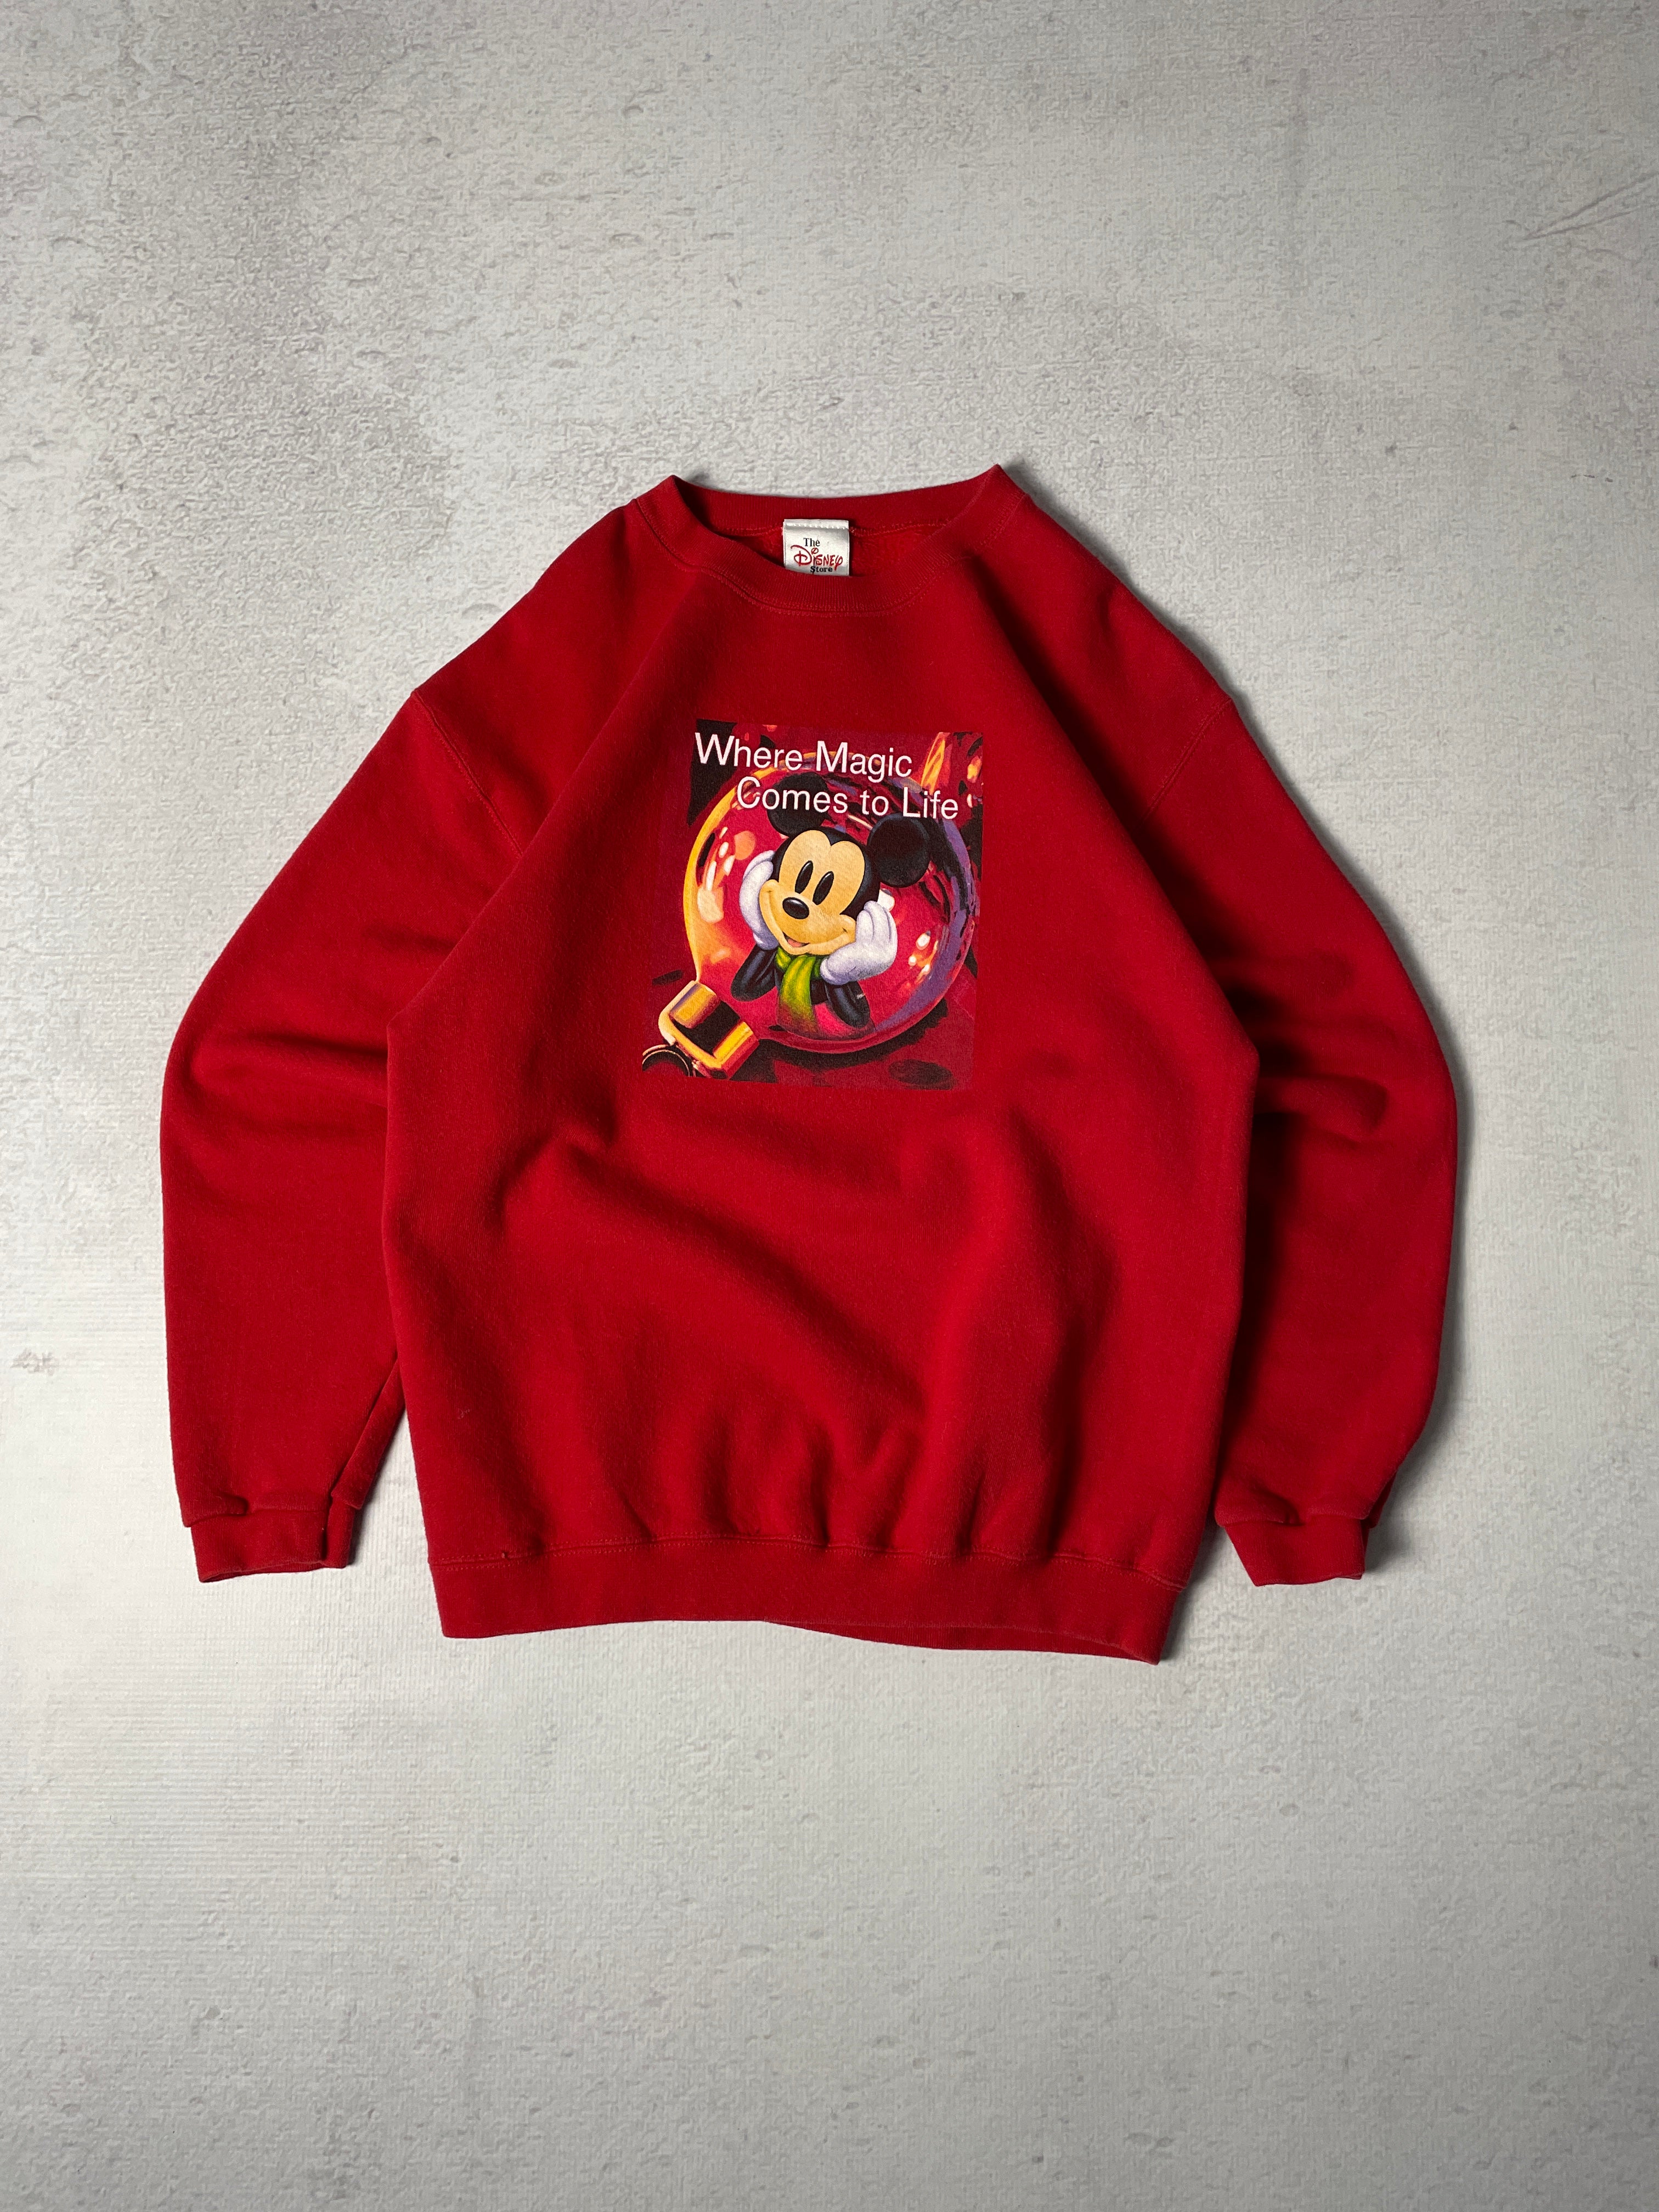 Vintage Disney Mickey Mouse Crewneck Sweatshirt - Men's Medium